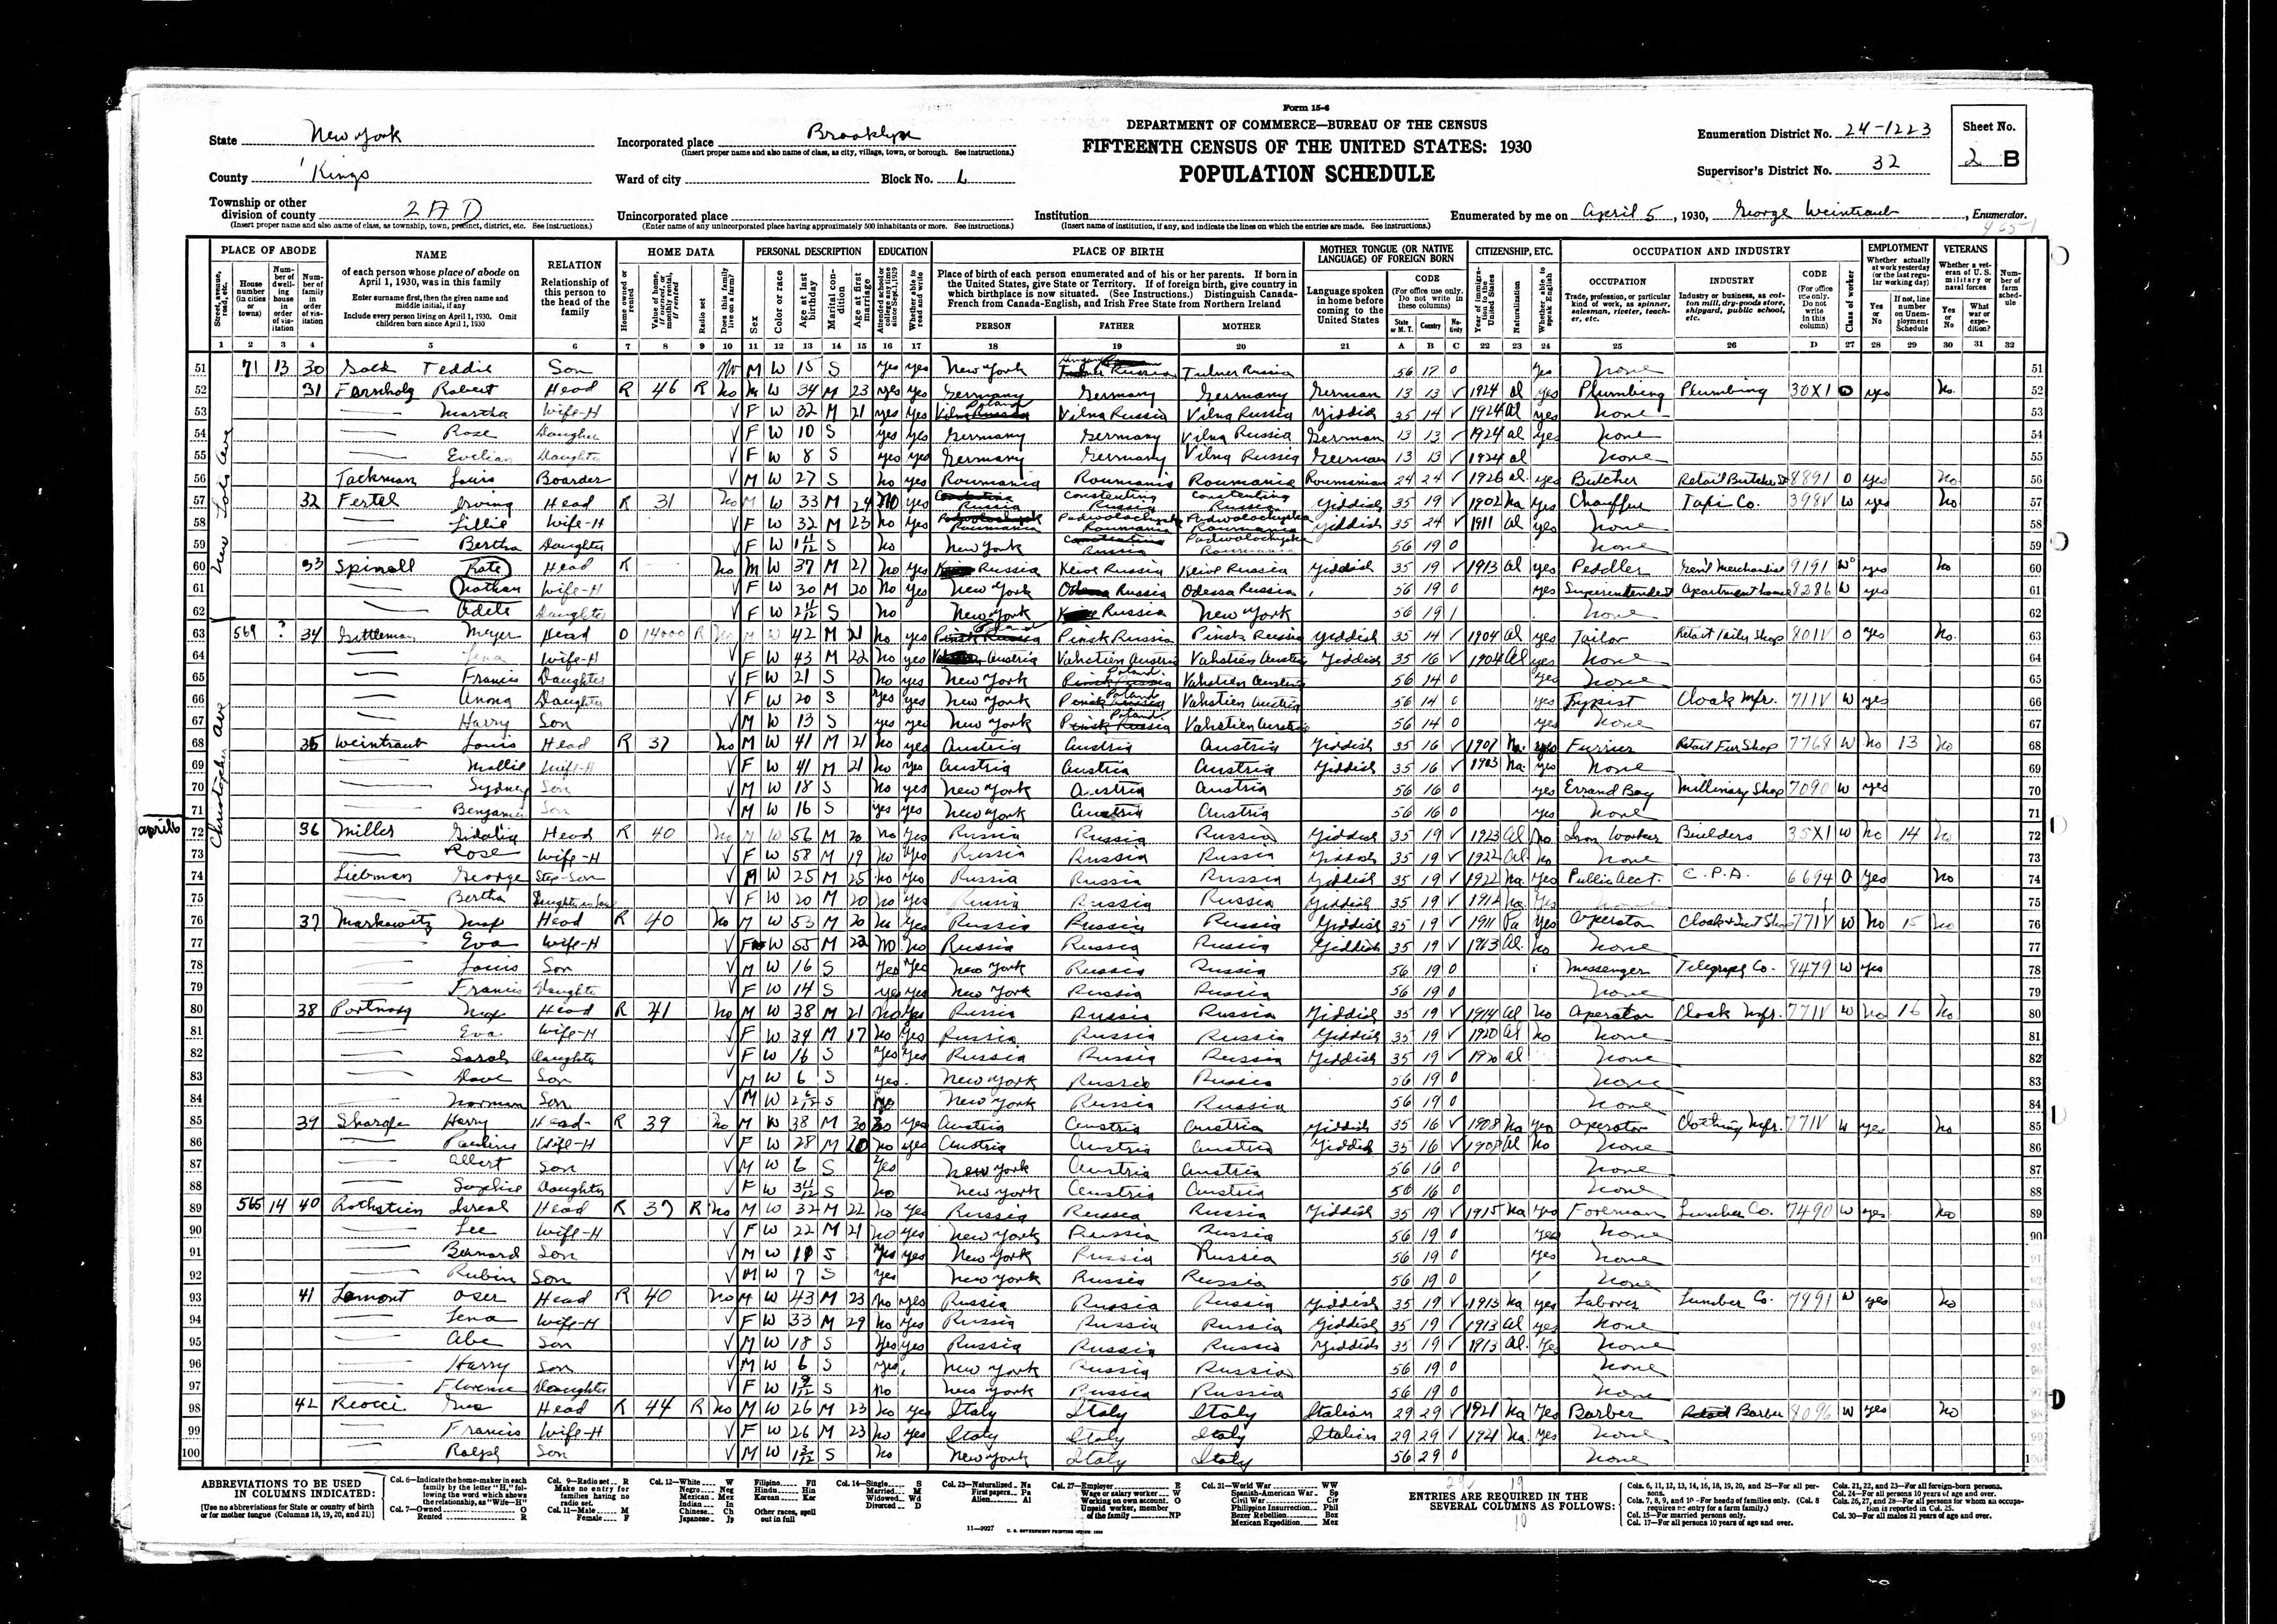 1930 US Census, Harry Gittleman, line 67